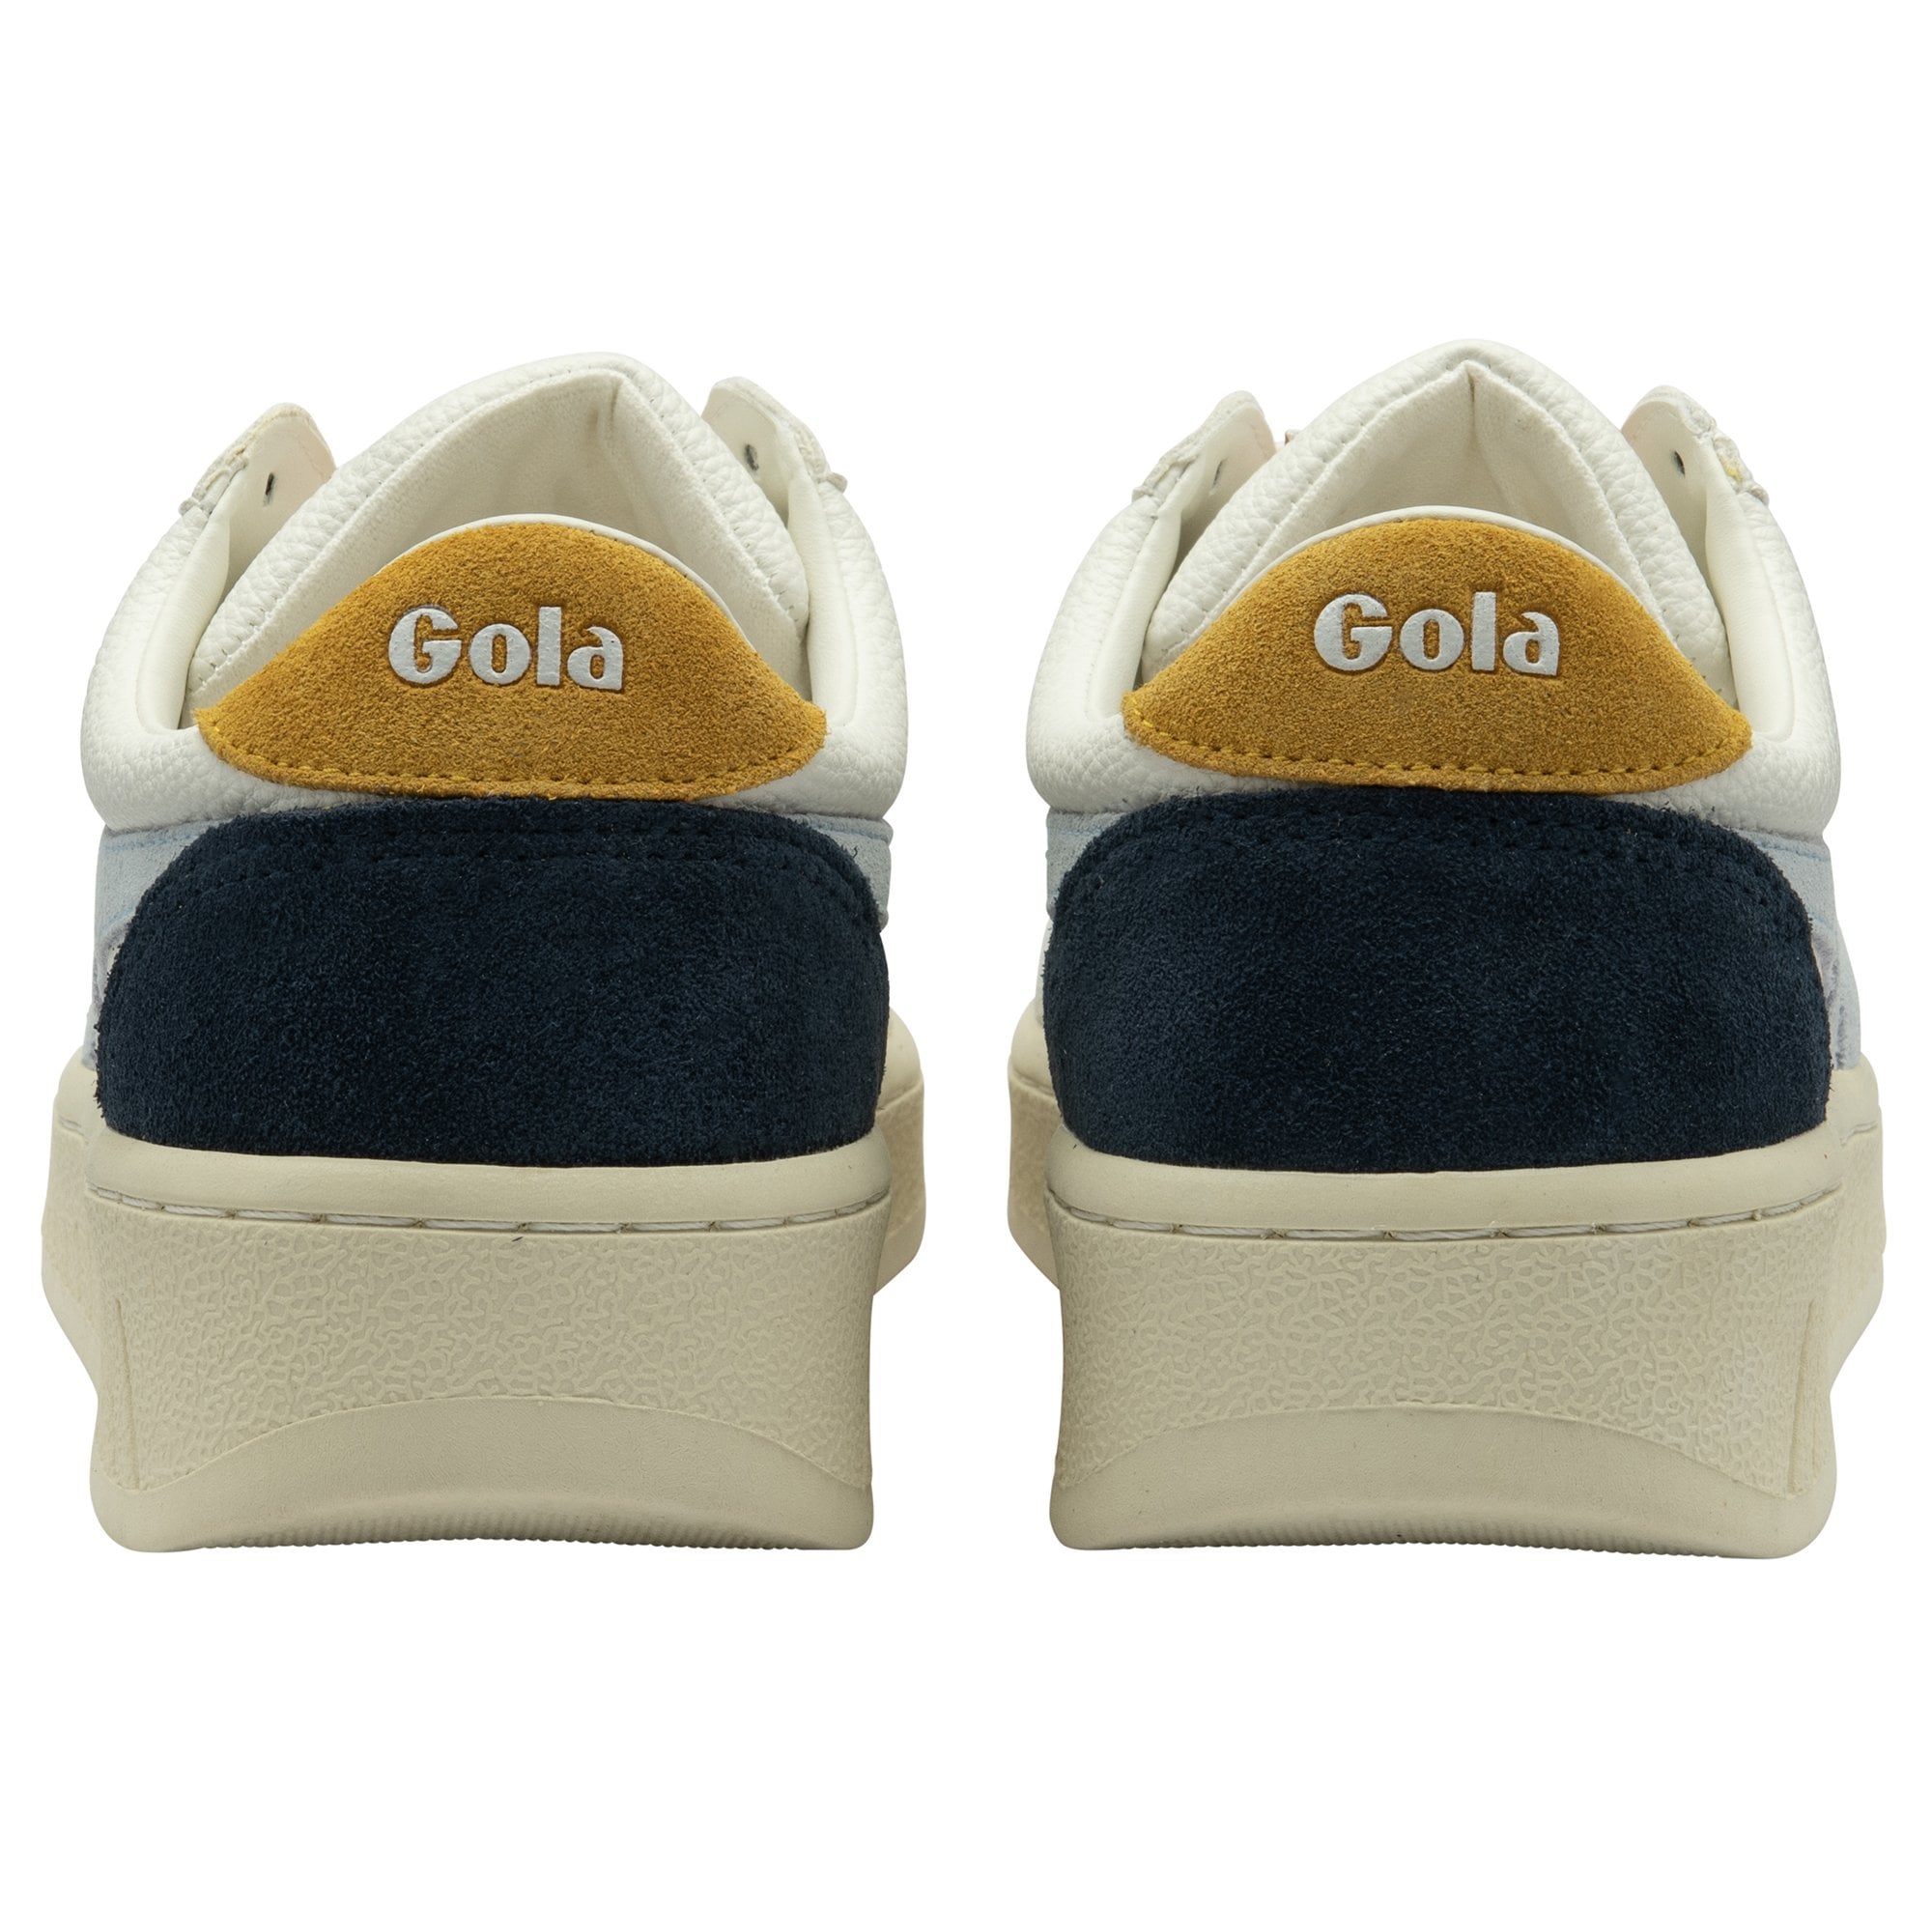  Gola Classics Women's Grandslam Trident Trainers Sneaker in White/Ice Blue/Sun